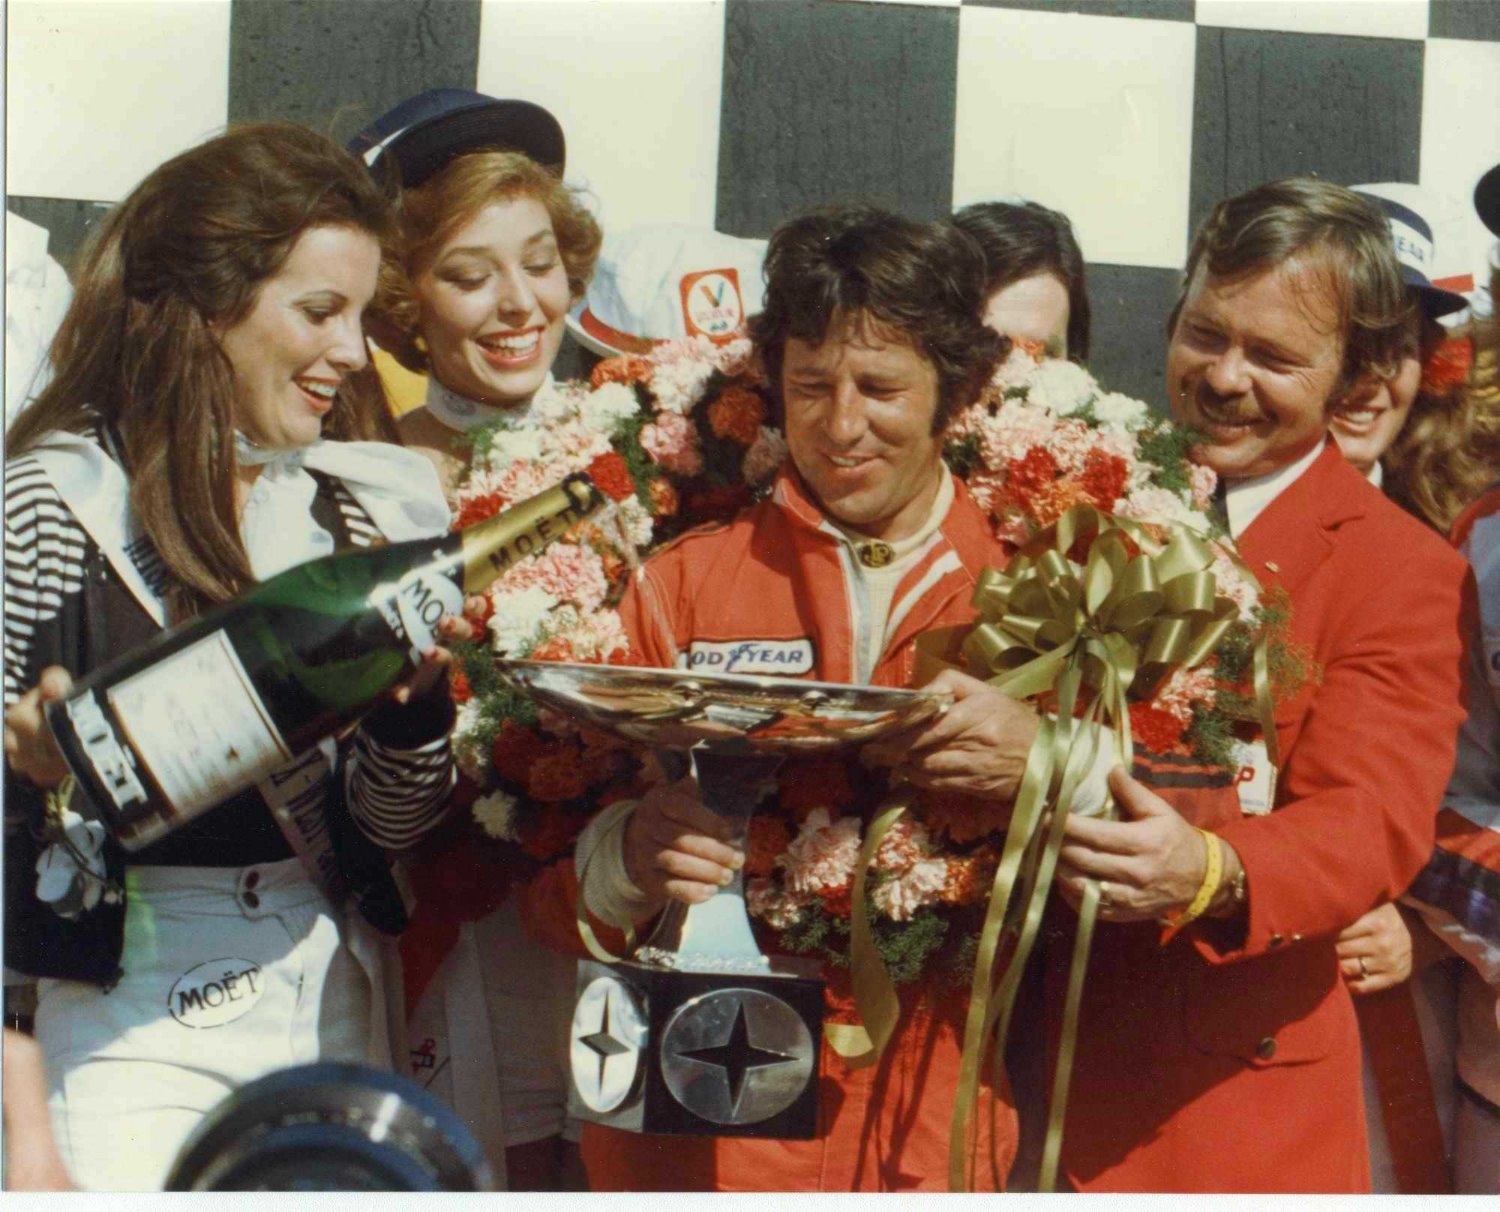 1977 Long Beach podium